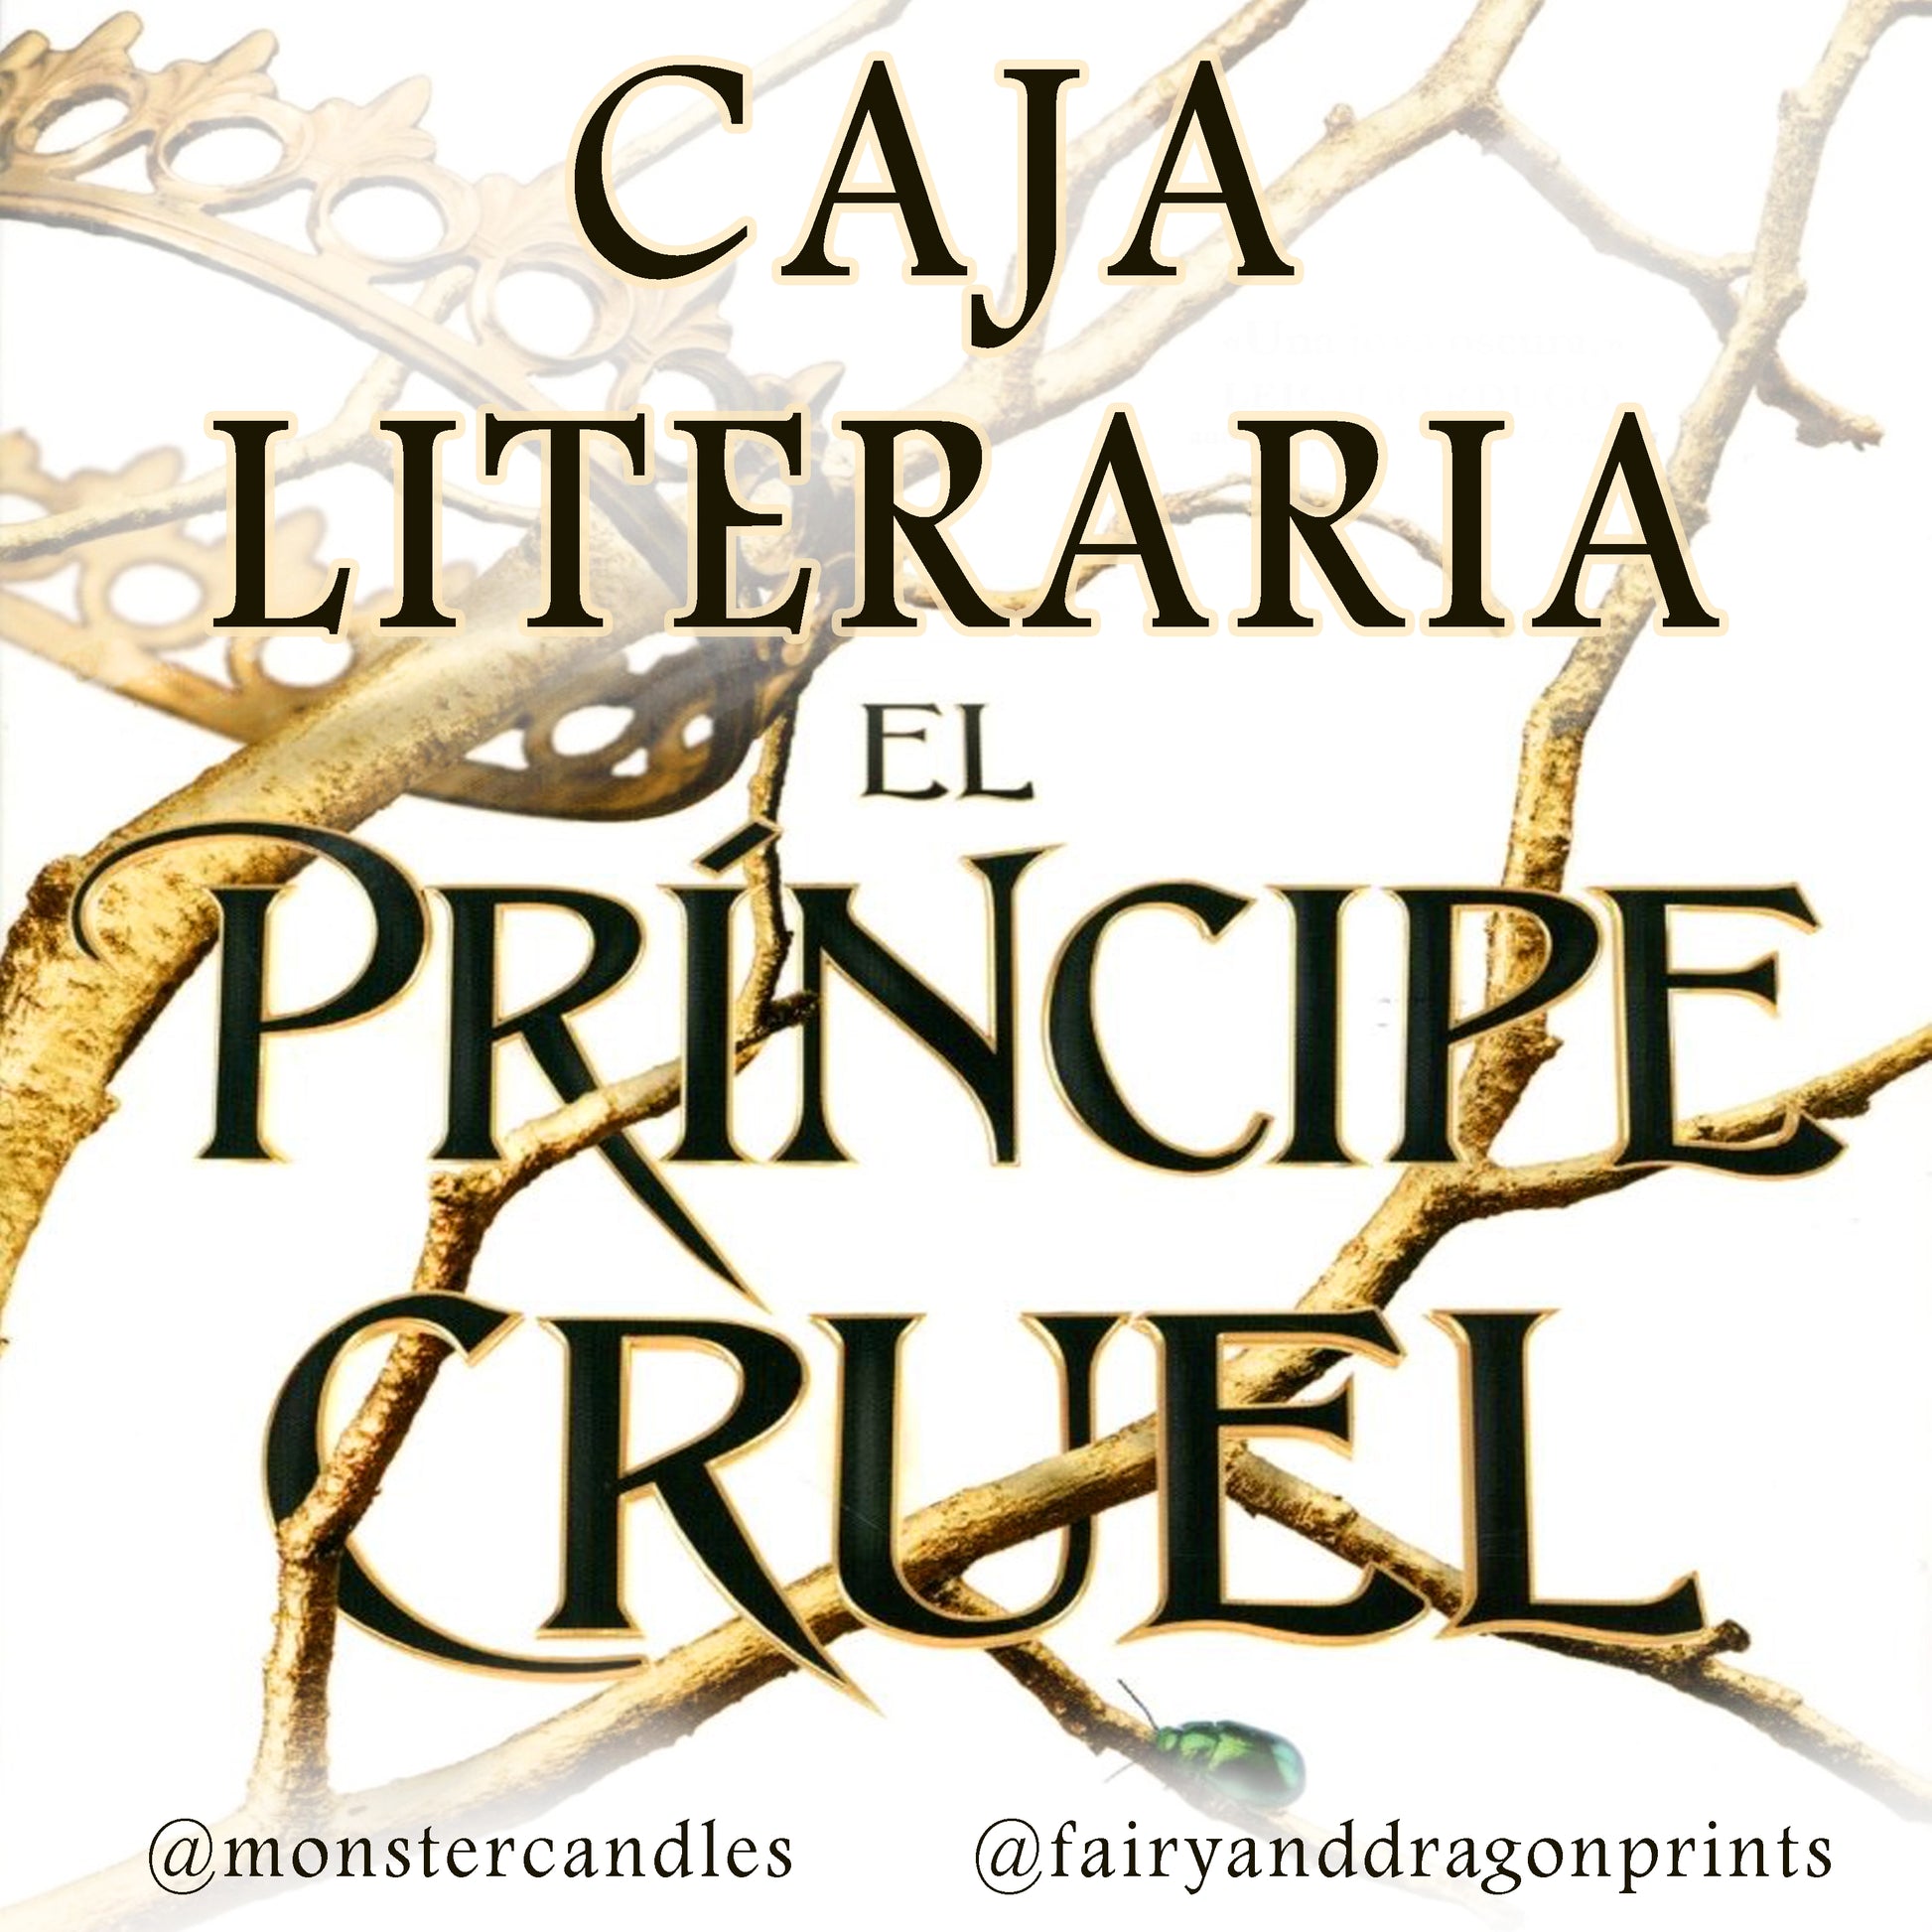 Caja Literaria “El Príncipe Cruel” - Monsters Candles ® - Velas Literarias artesanas de soja 100% ecológica